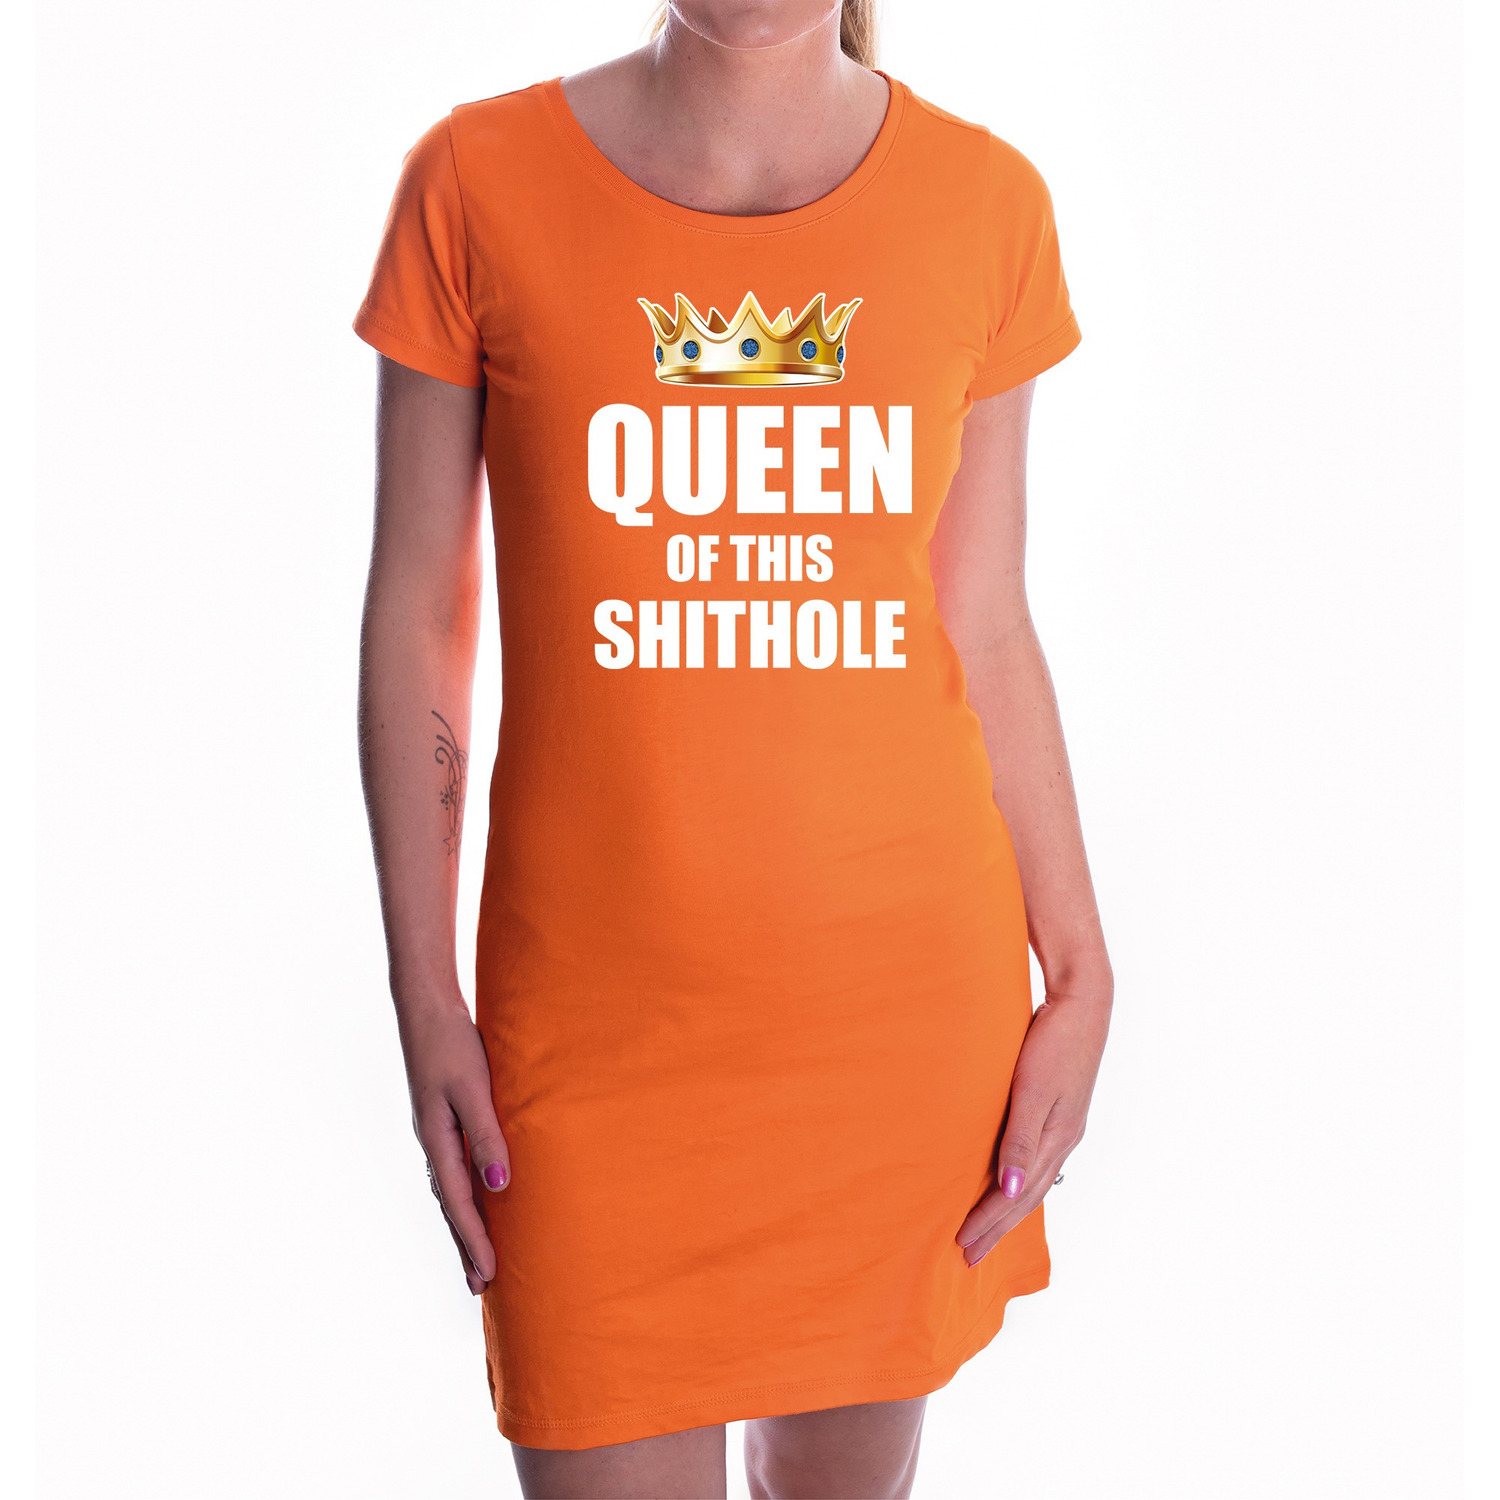 Koningsdag jurk oranje queen of this shithole voor dames